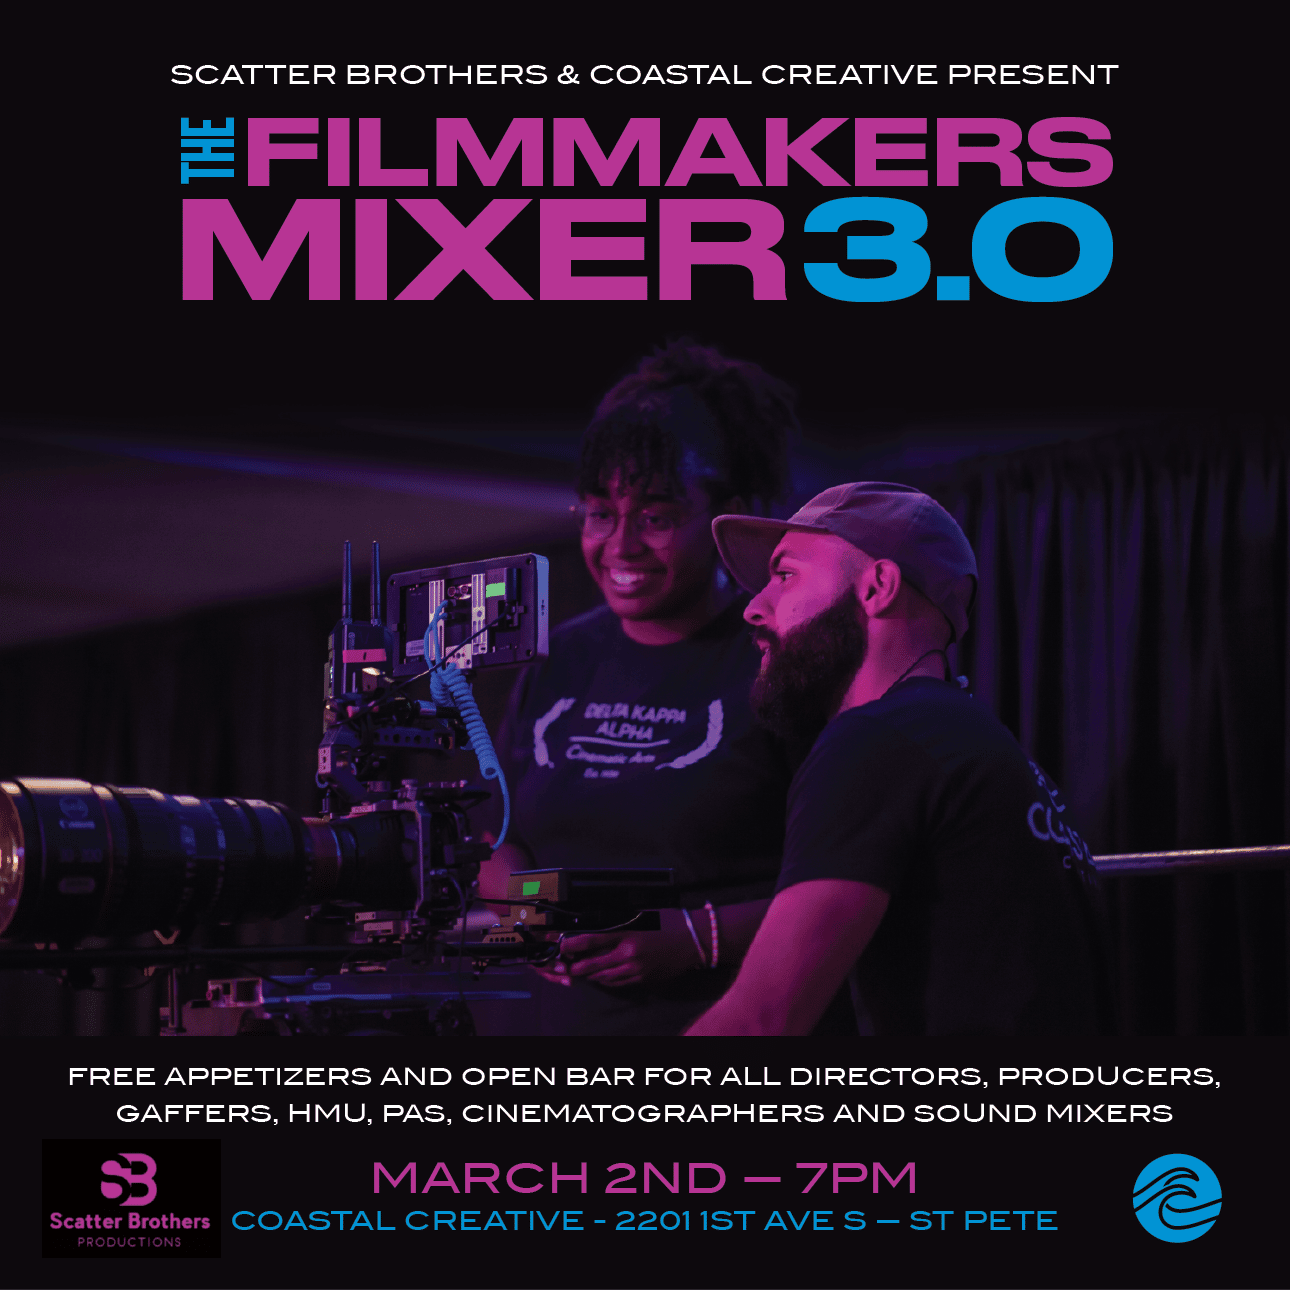 The Filmmakers Mixer 3.0